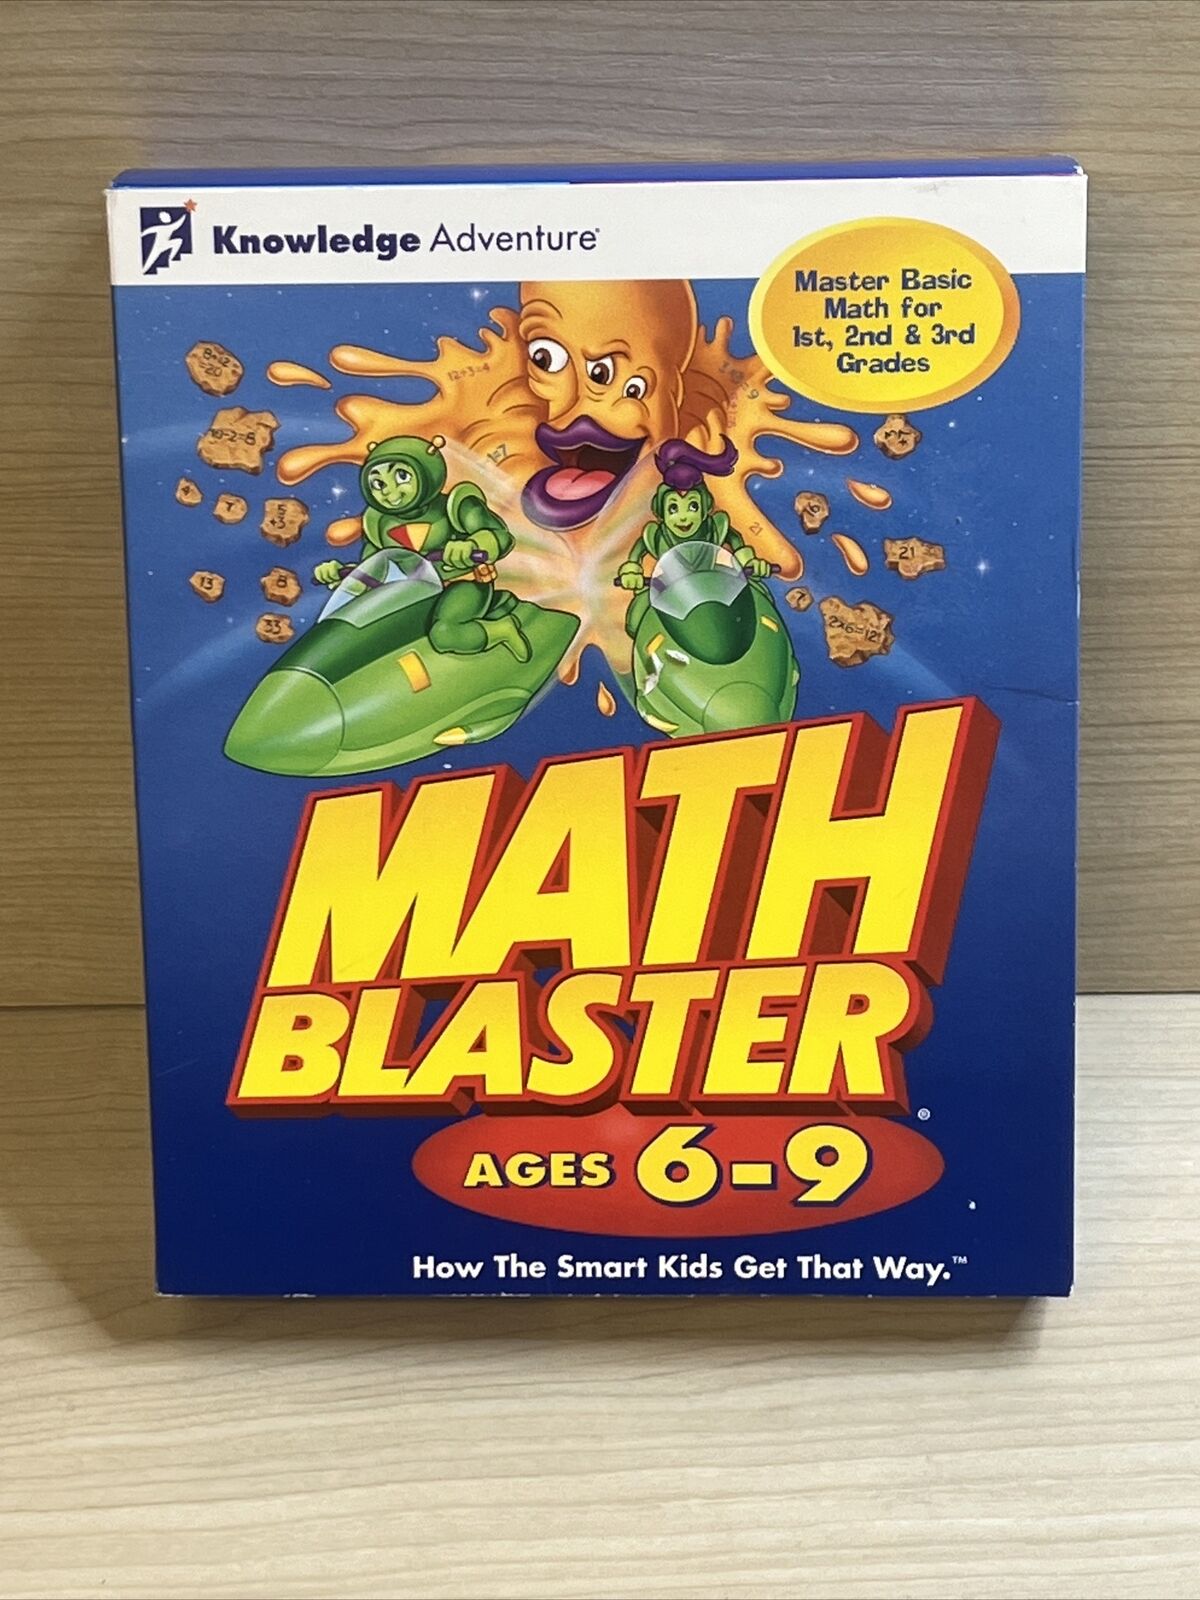 Math Blaster Knowledge Adventure PC Game Windows 95 98 Teaching 2002 Sealed